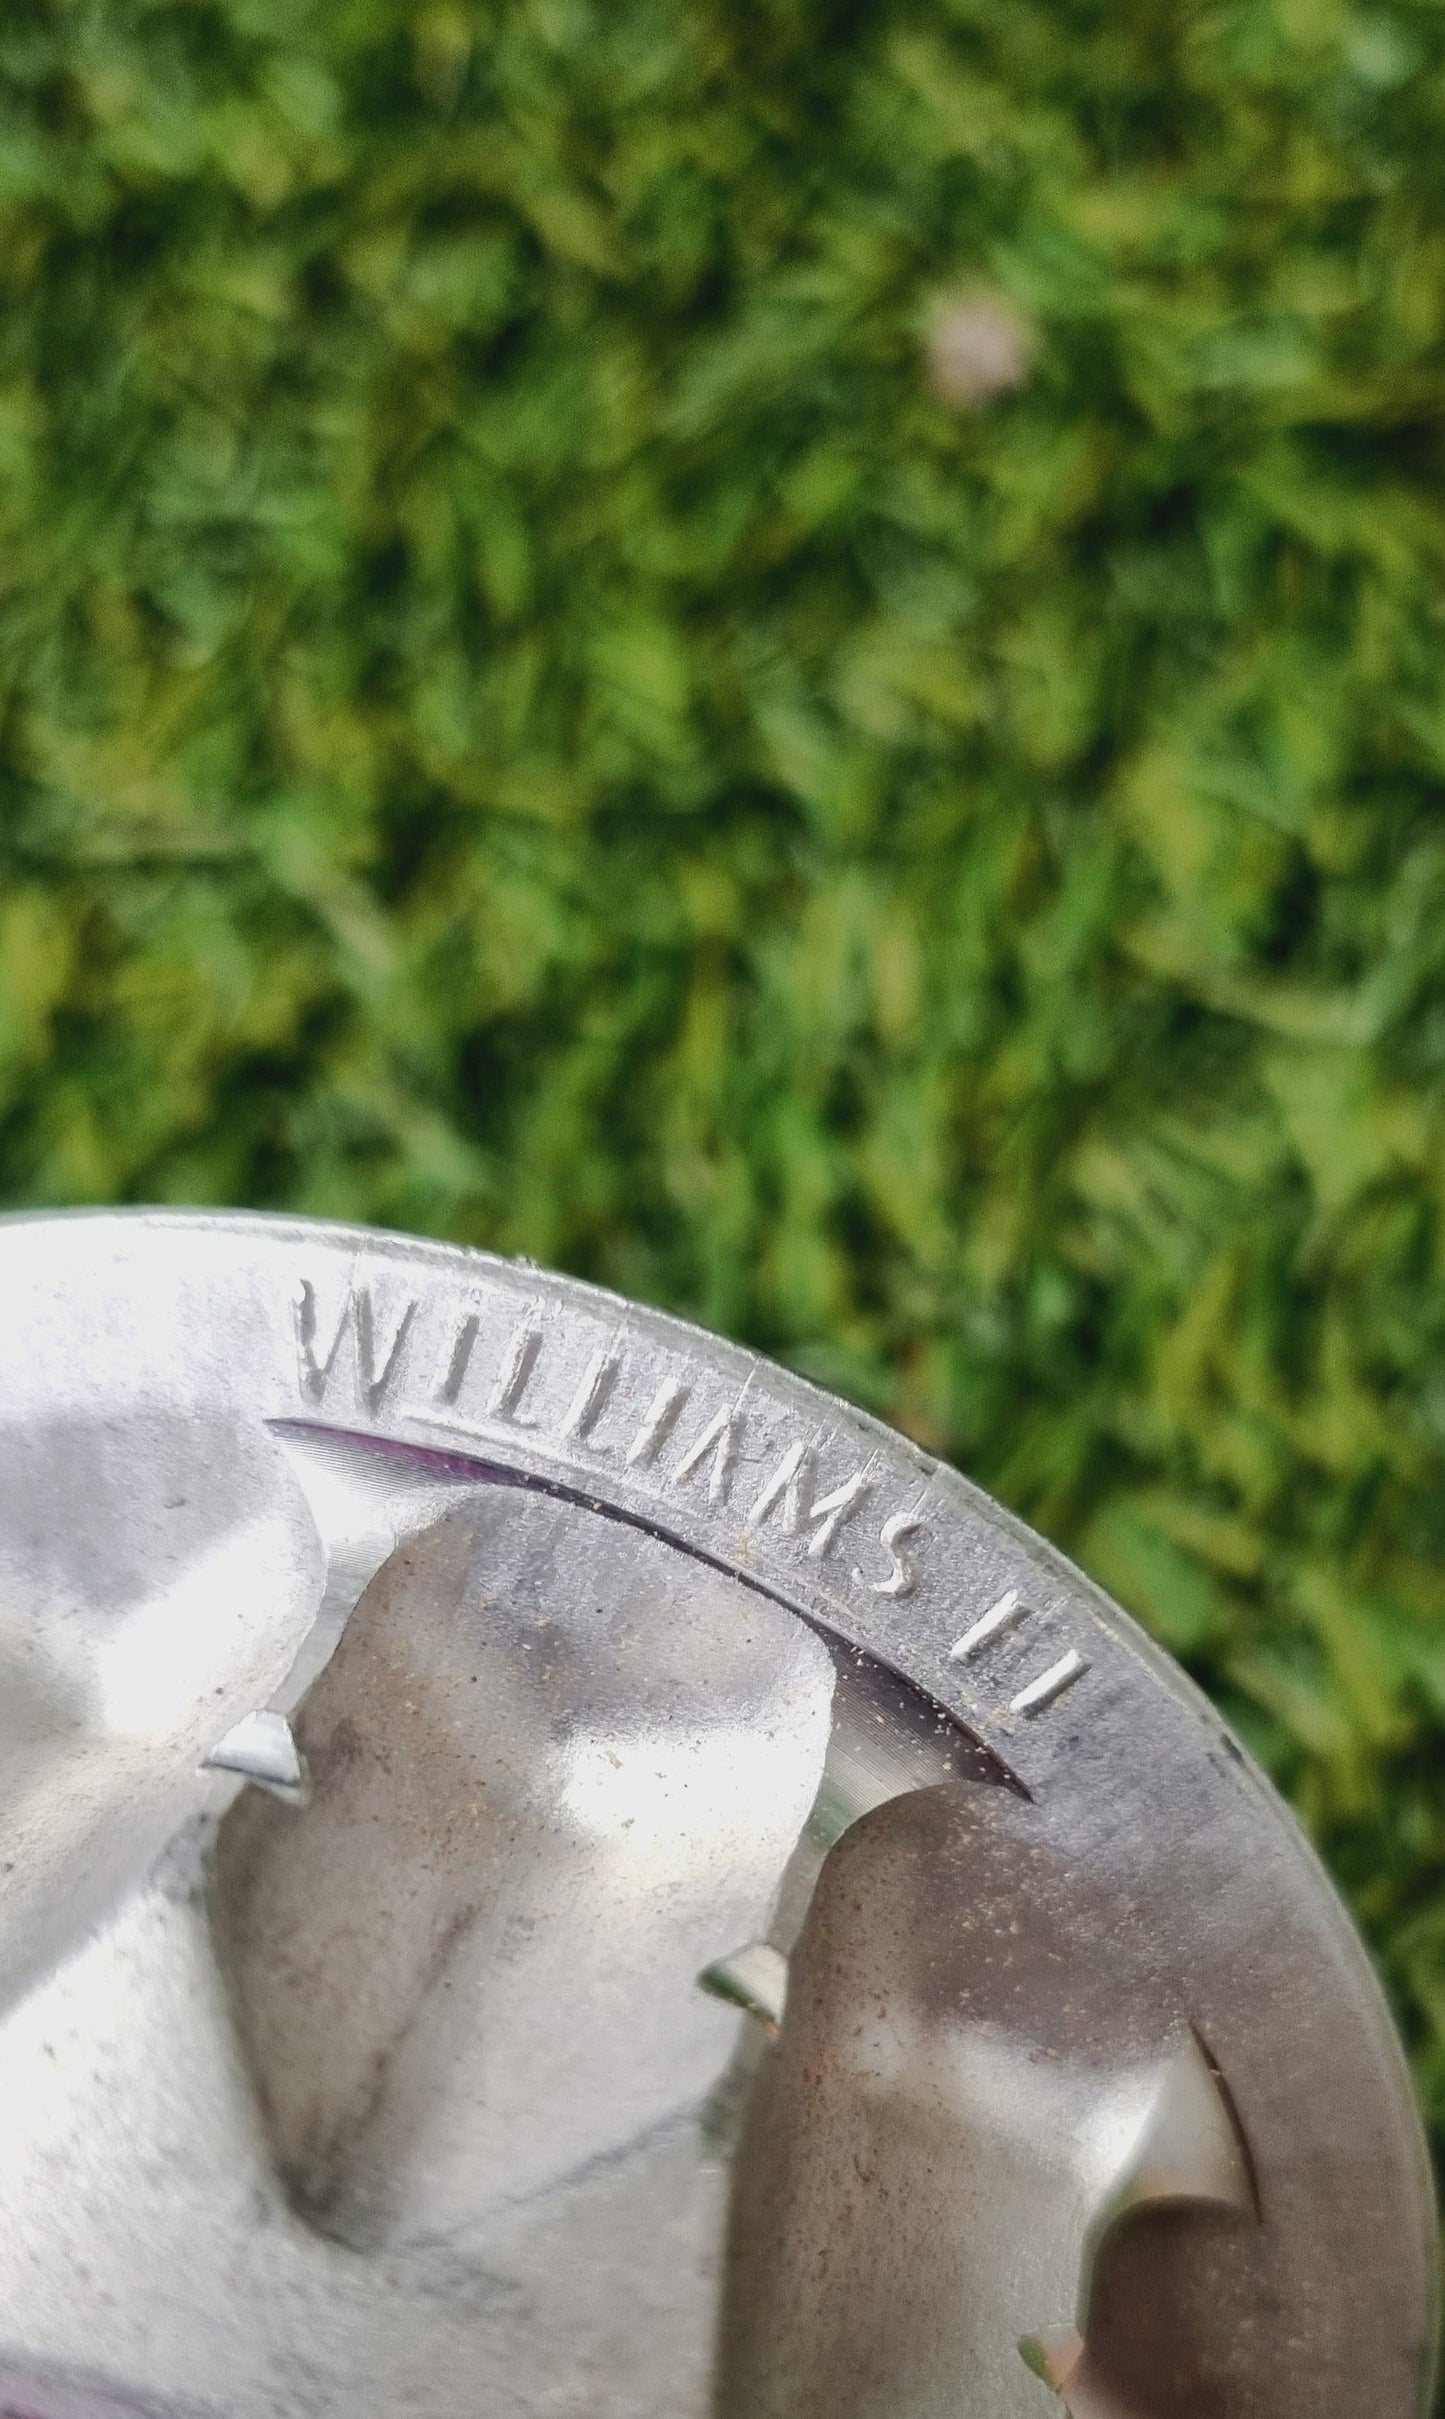 Williams F1 Formula 1 Wheel Nut. Coded & Very Rare Item